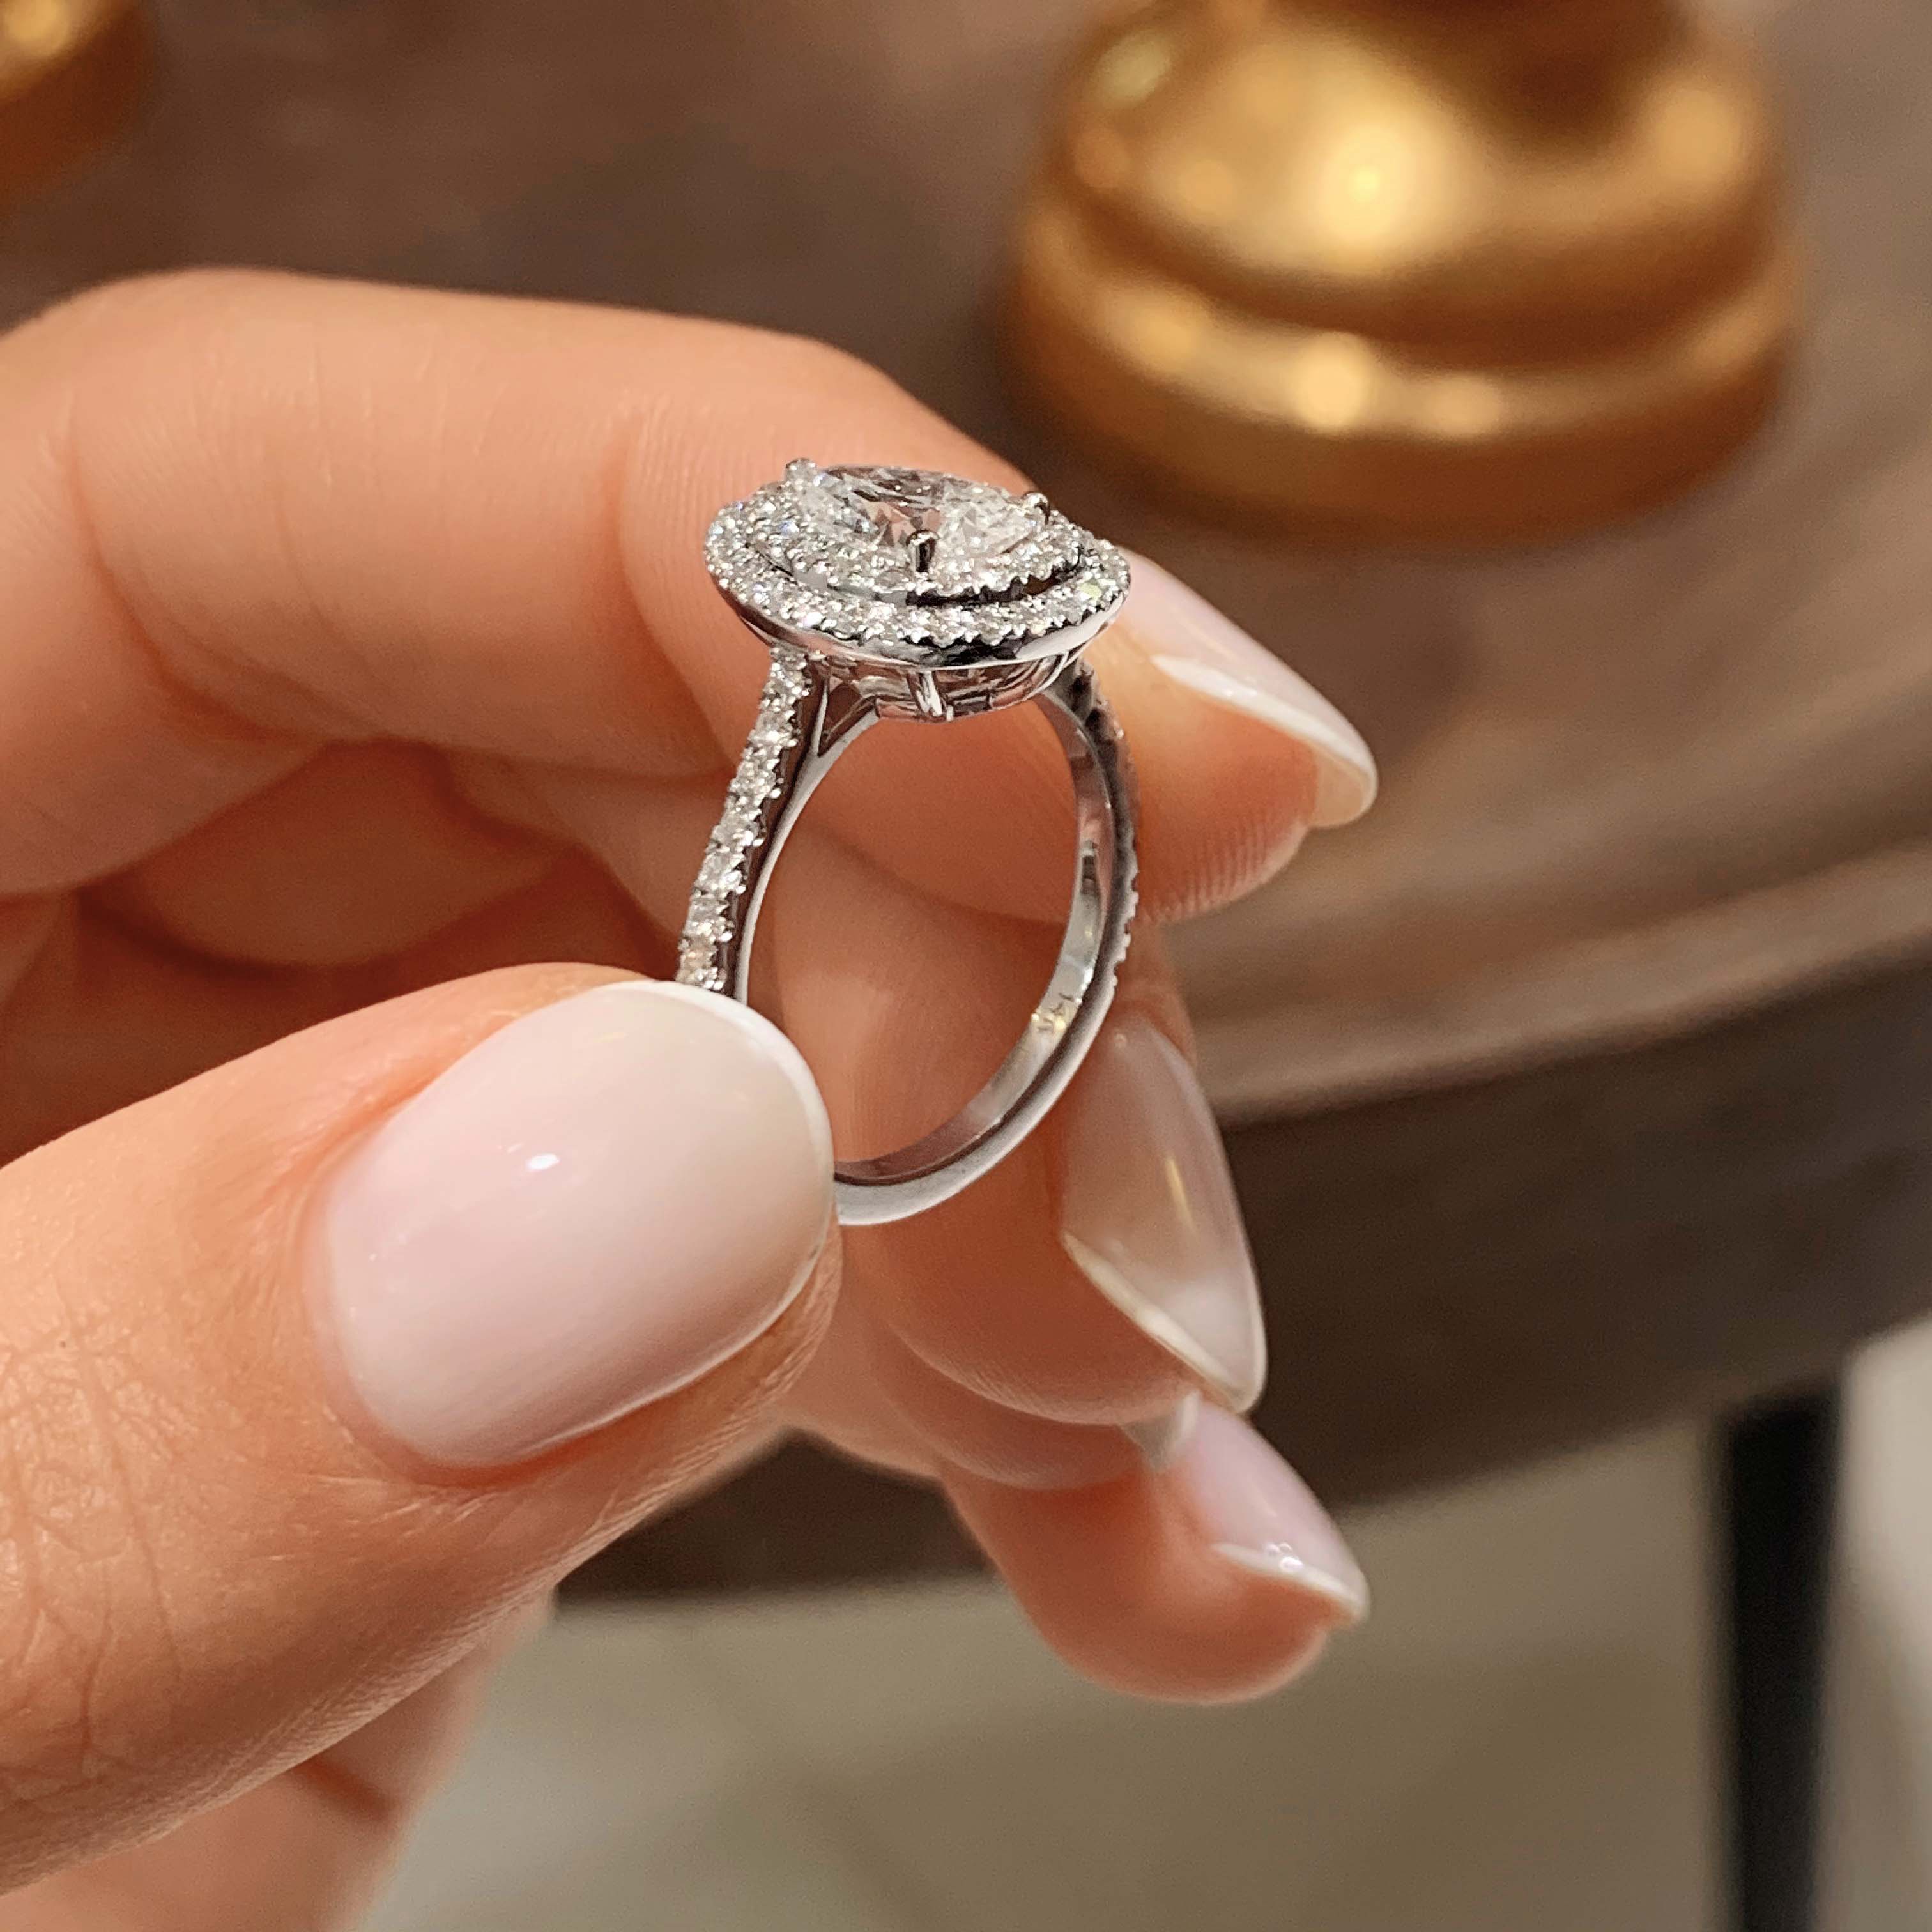 Gloria Diamond Engagement Ring   (1.65 Carat) -14K White Gold